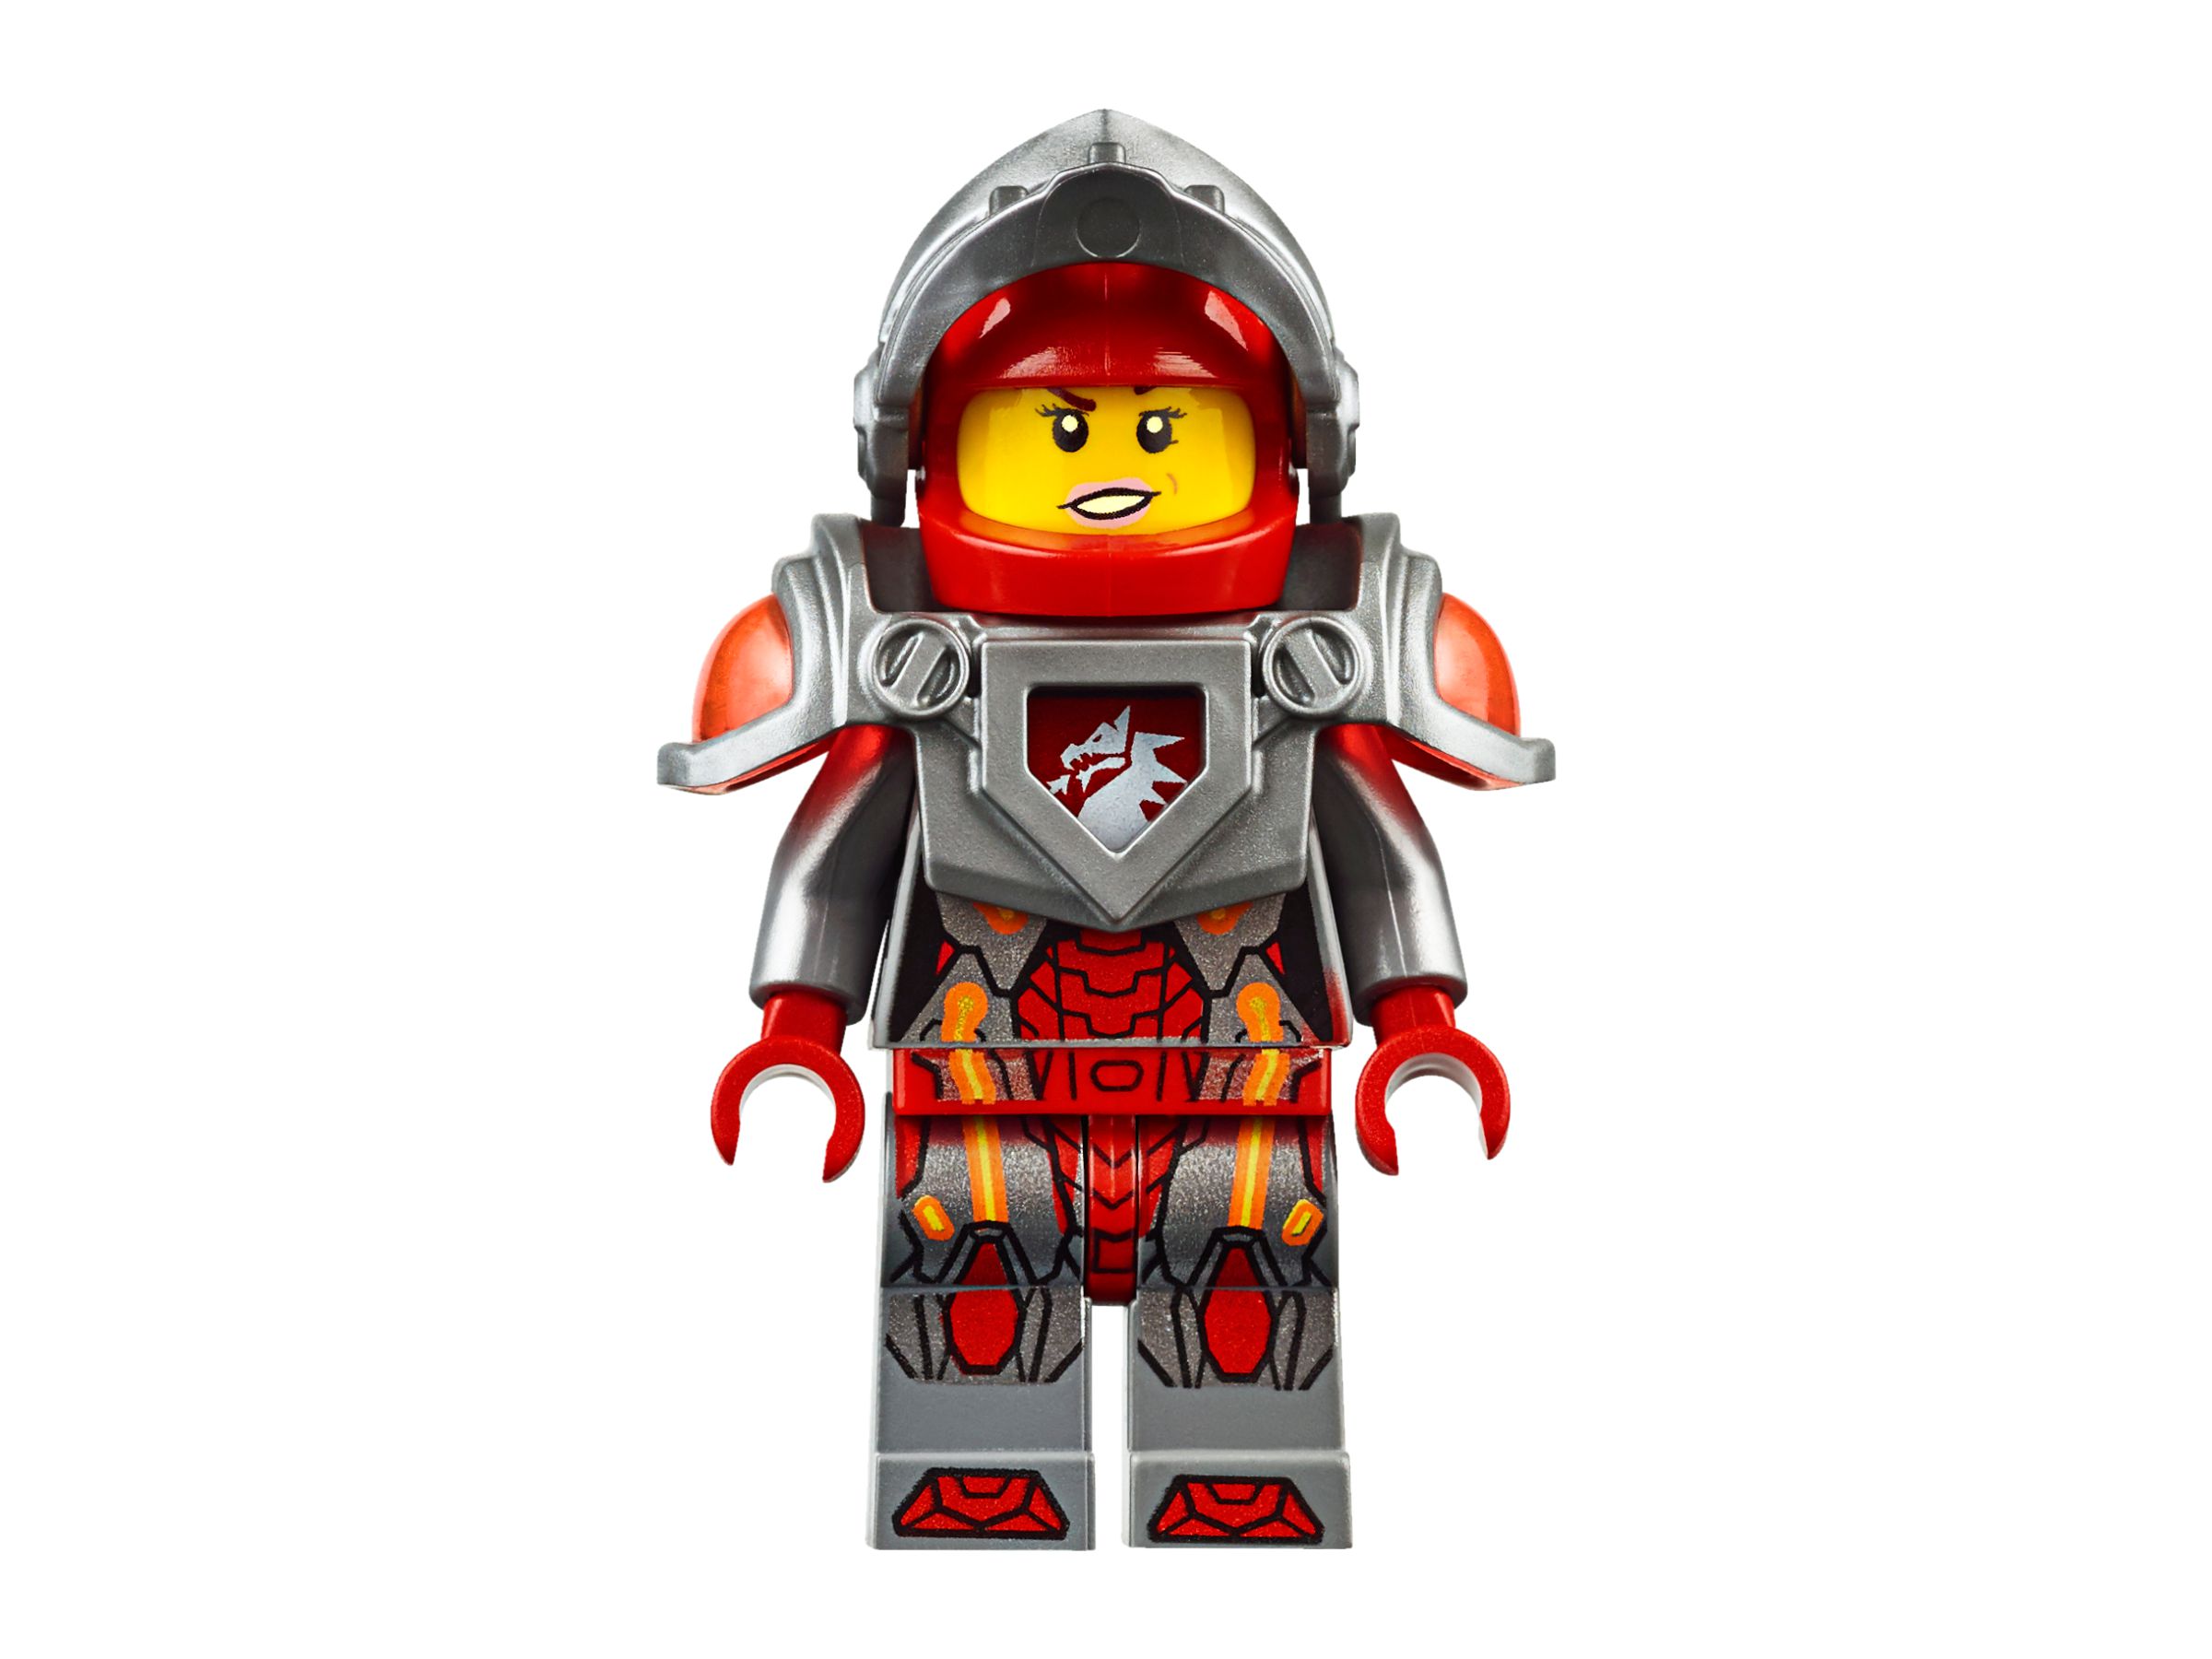 LEGO Nexo Knights 70323 Jestros Vulkanfestung LEGO_70323_alt9.jpg